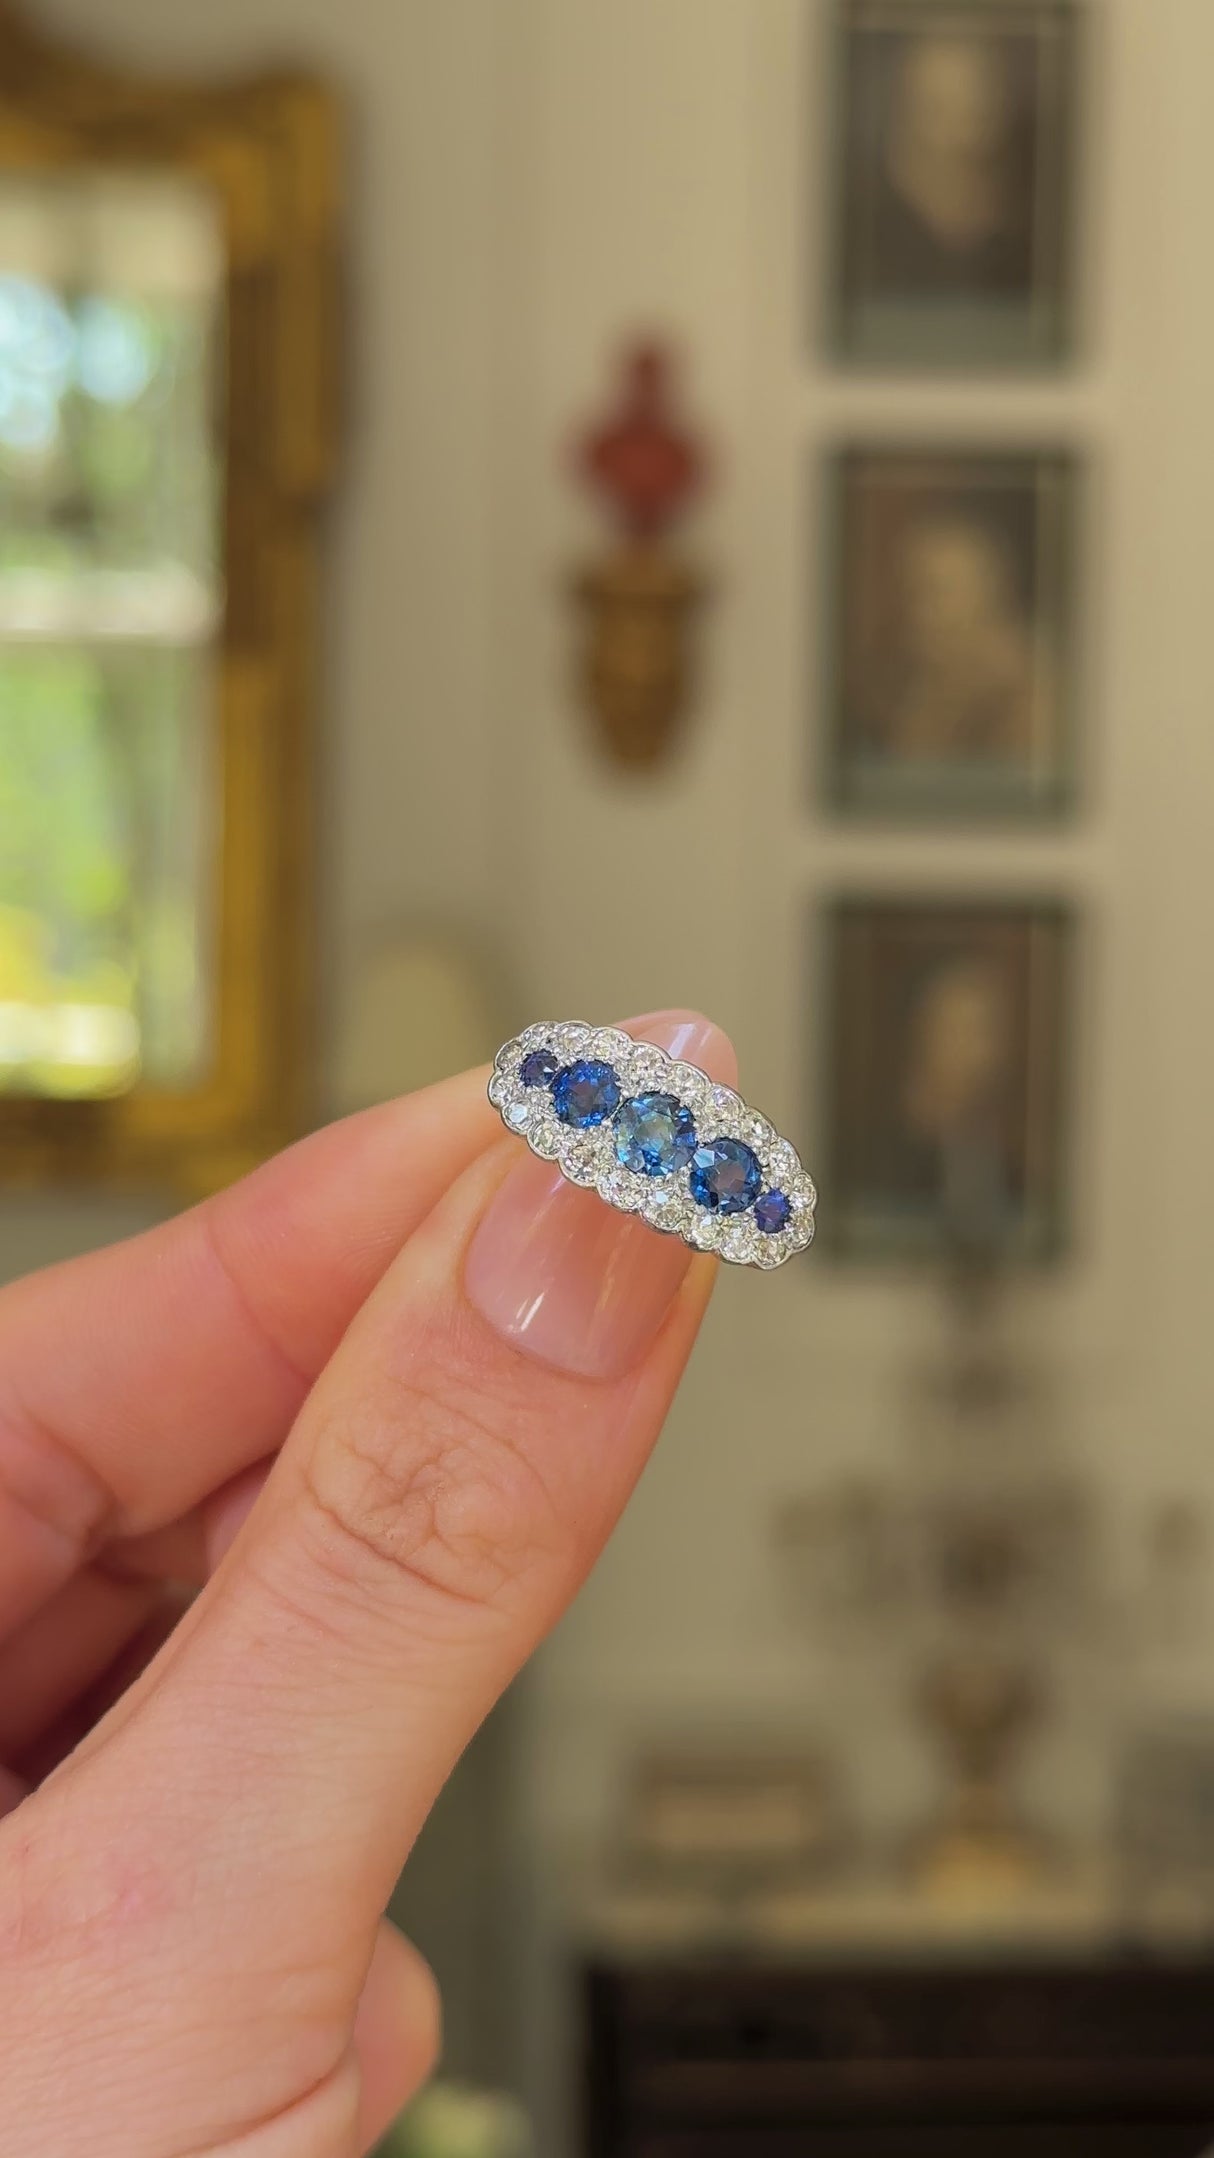 Edwardian Blue Sapphire and Diamond Five Stone Ring, 18ct Yellow Gold